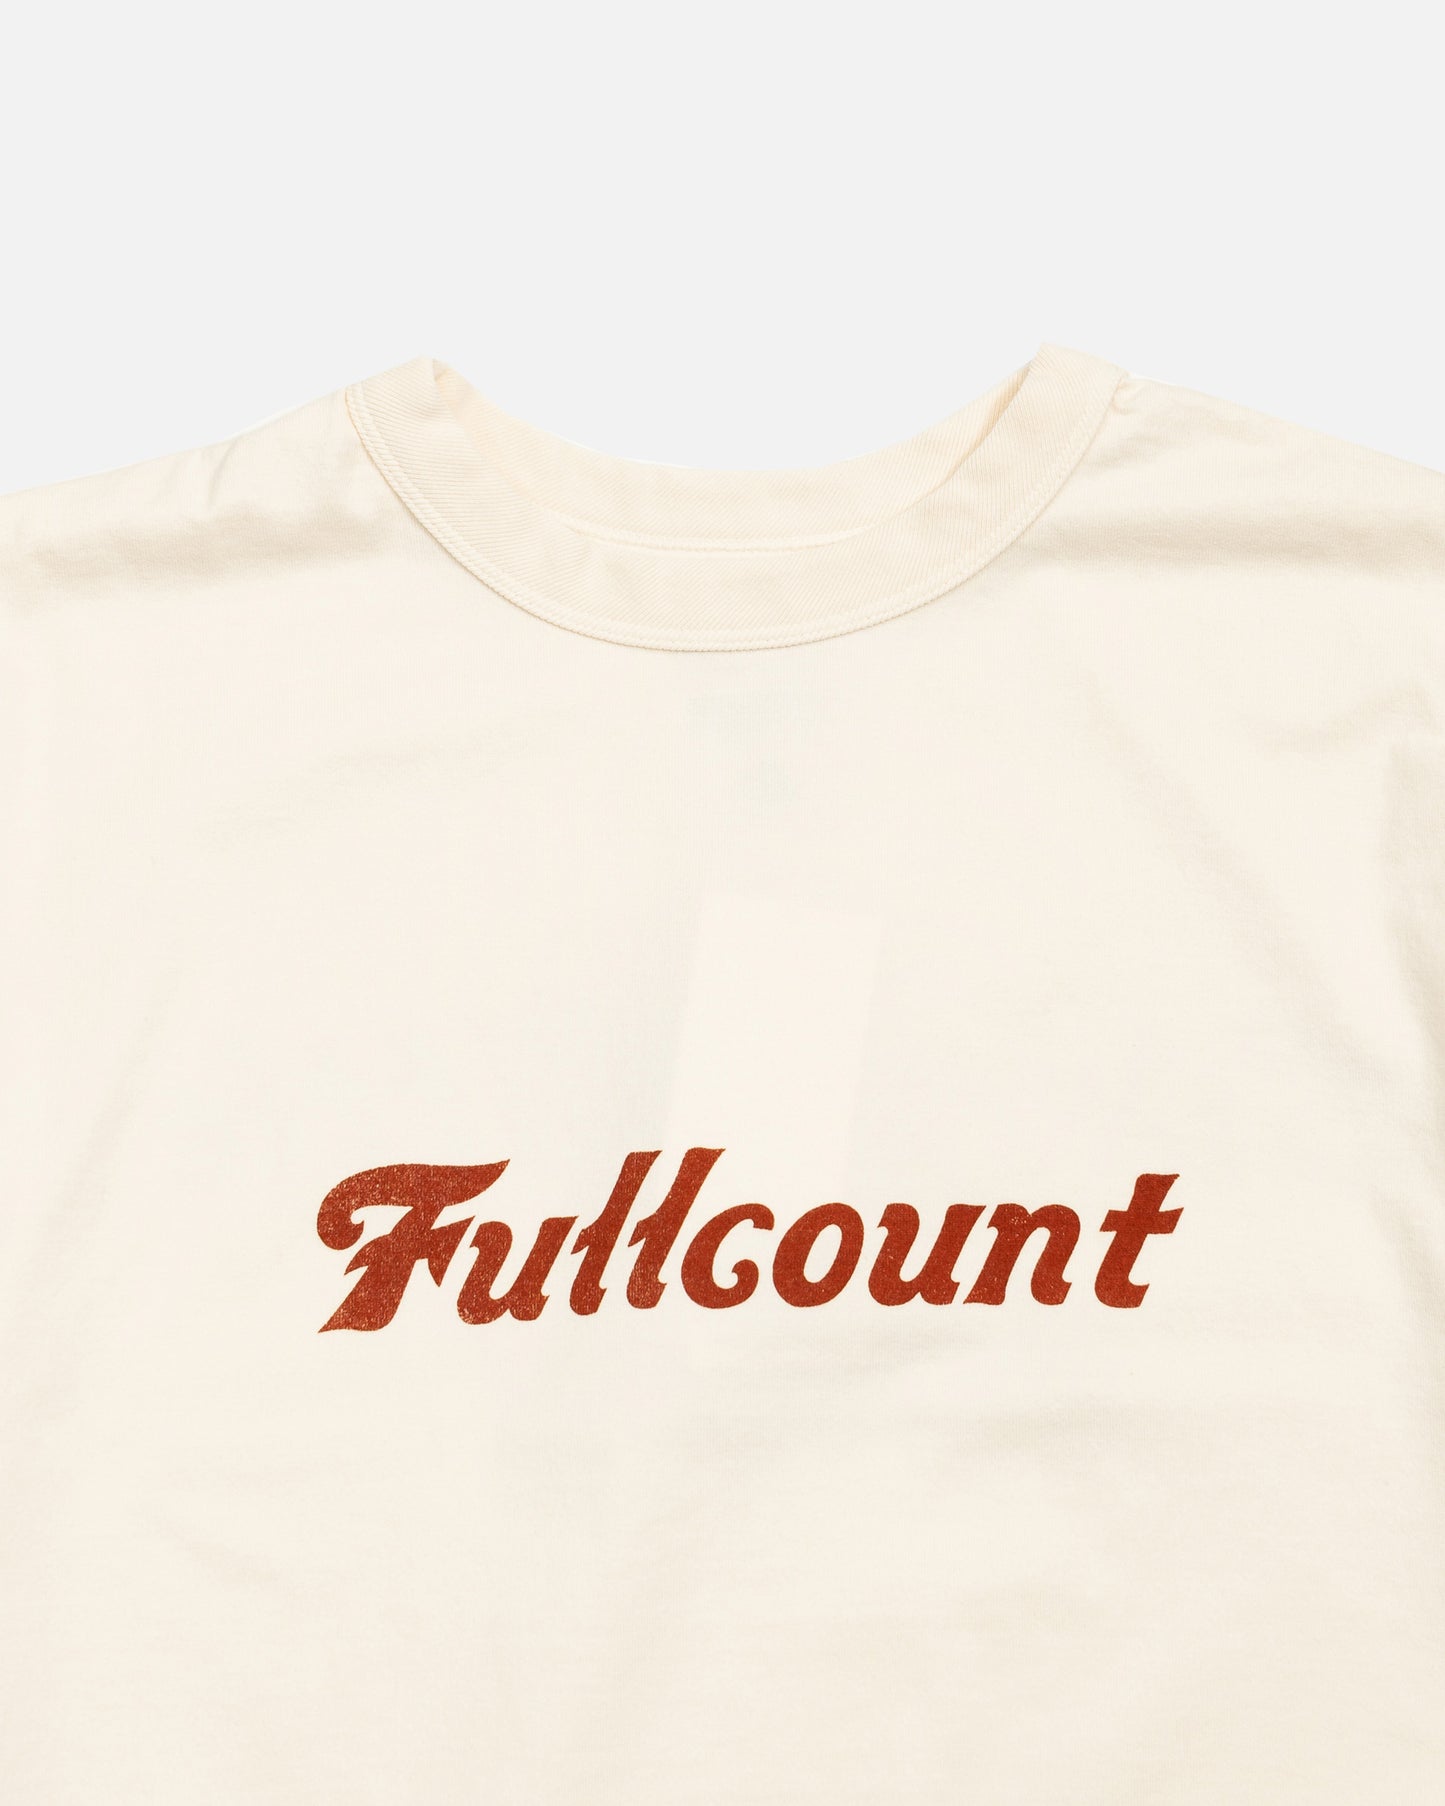 Fullcount T-Shirt Ecru